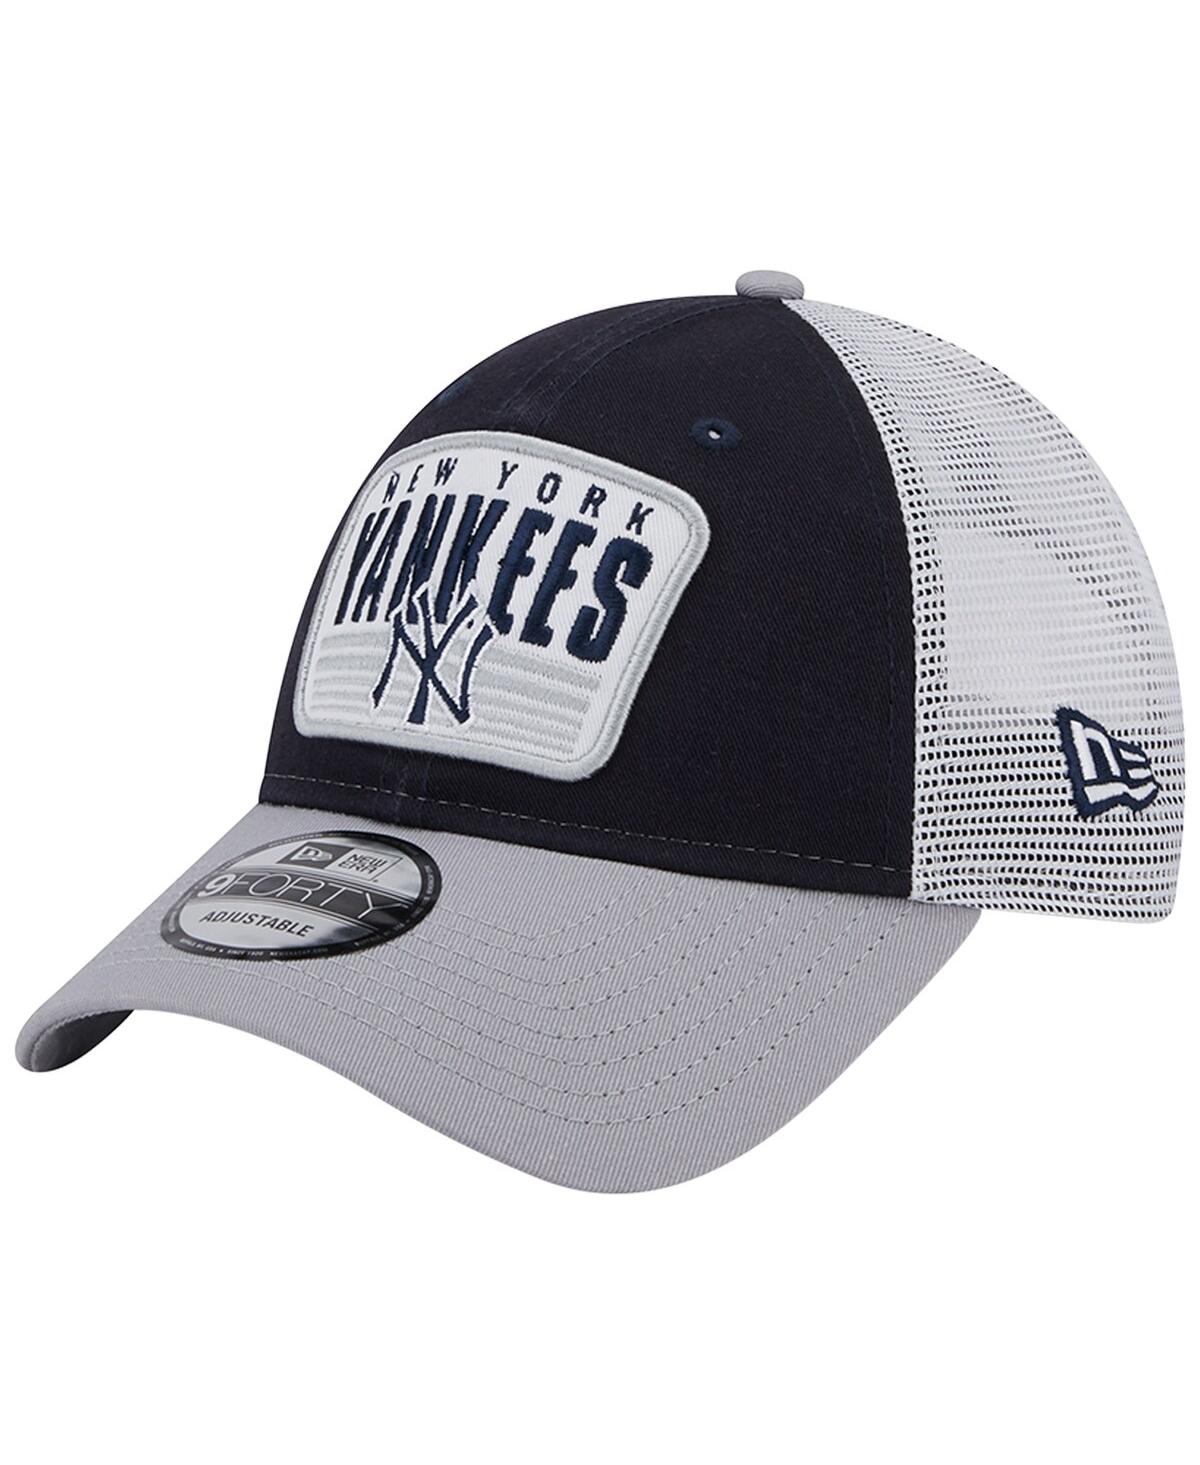 Toronto Blue Jays New Era Post Up Pin 9FIFTY Snapback Hat - Black